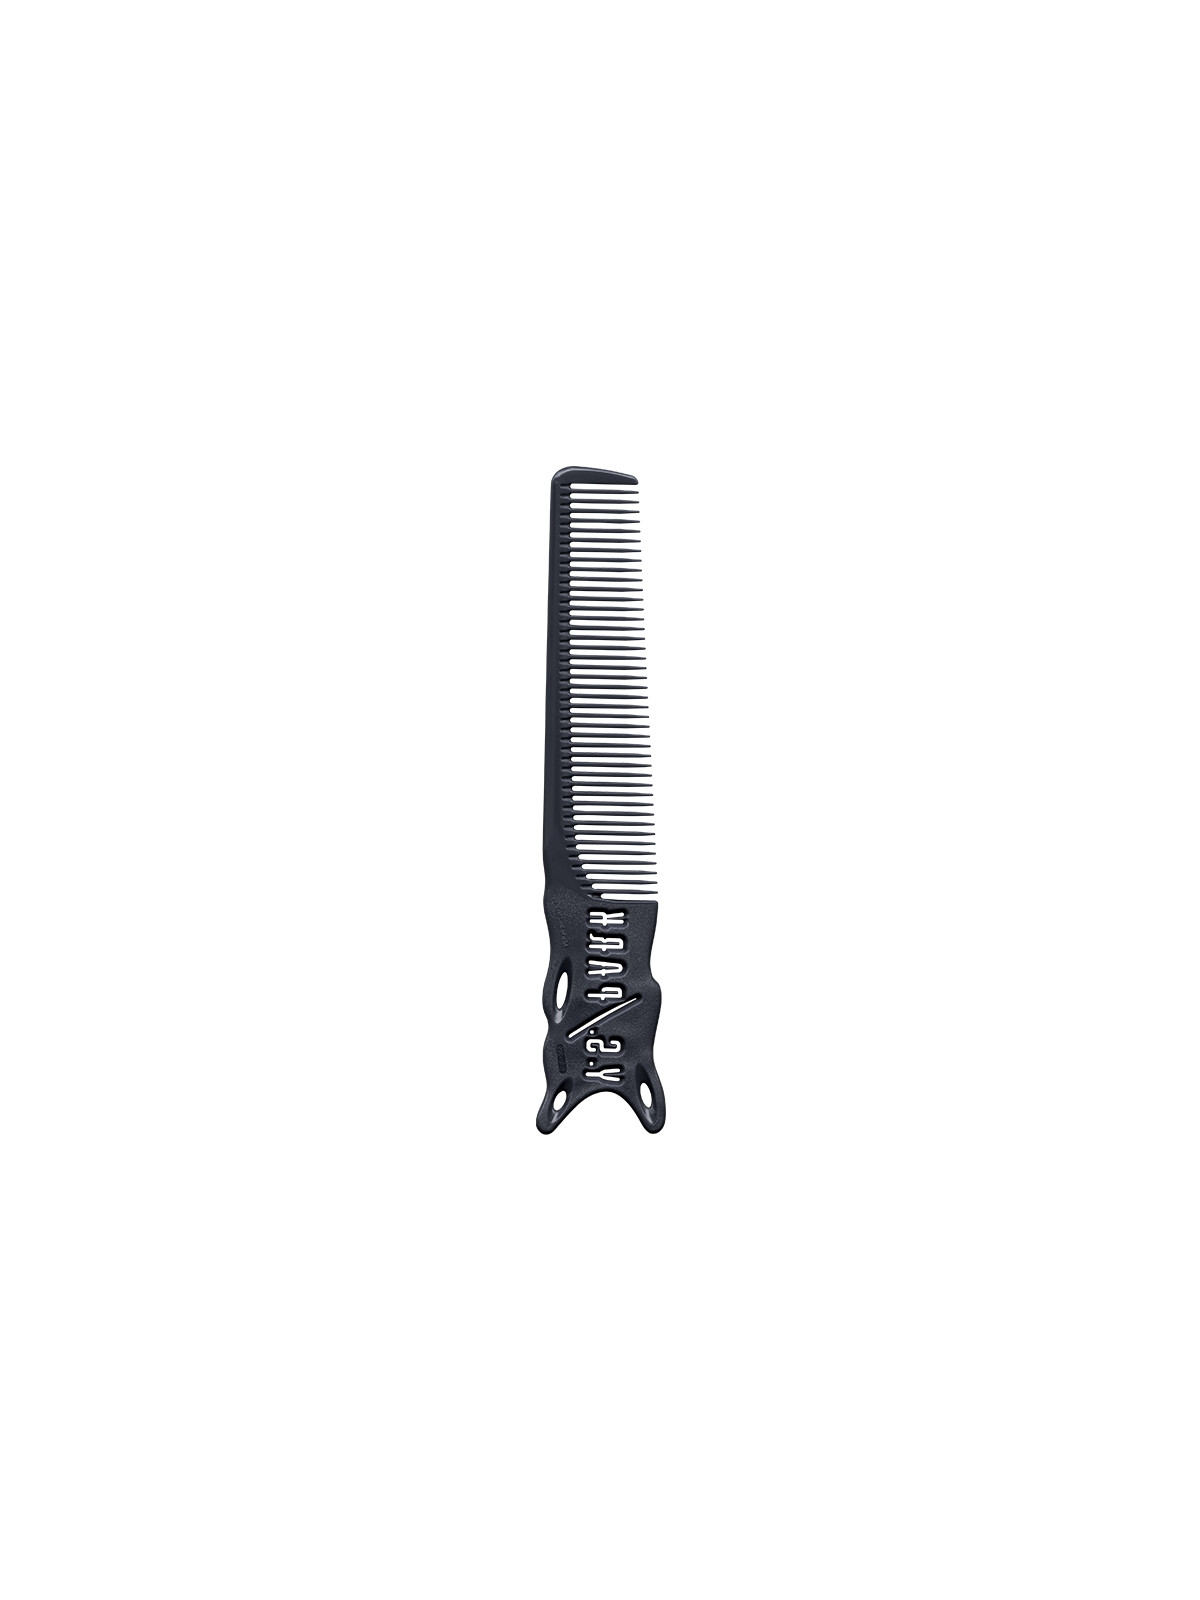 Y.S. Park 209 Signature Flexible Cutting Comb 203mm